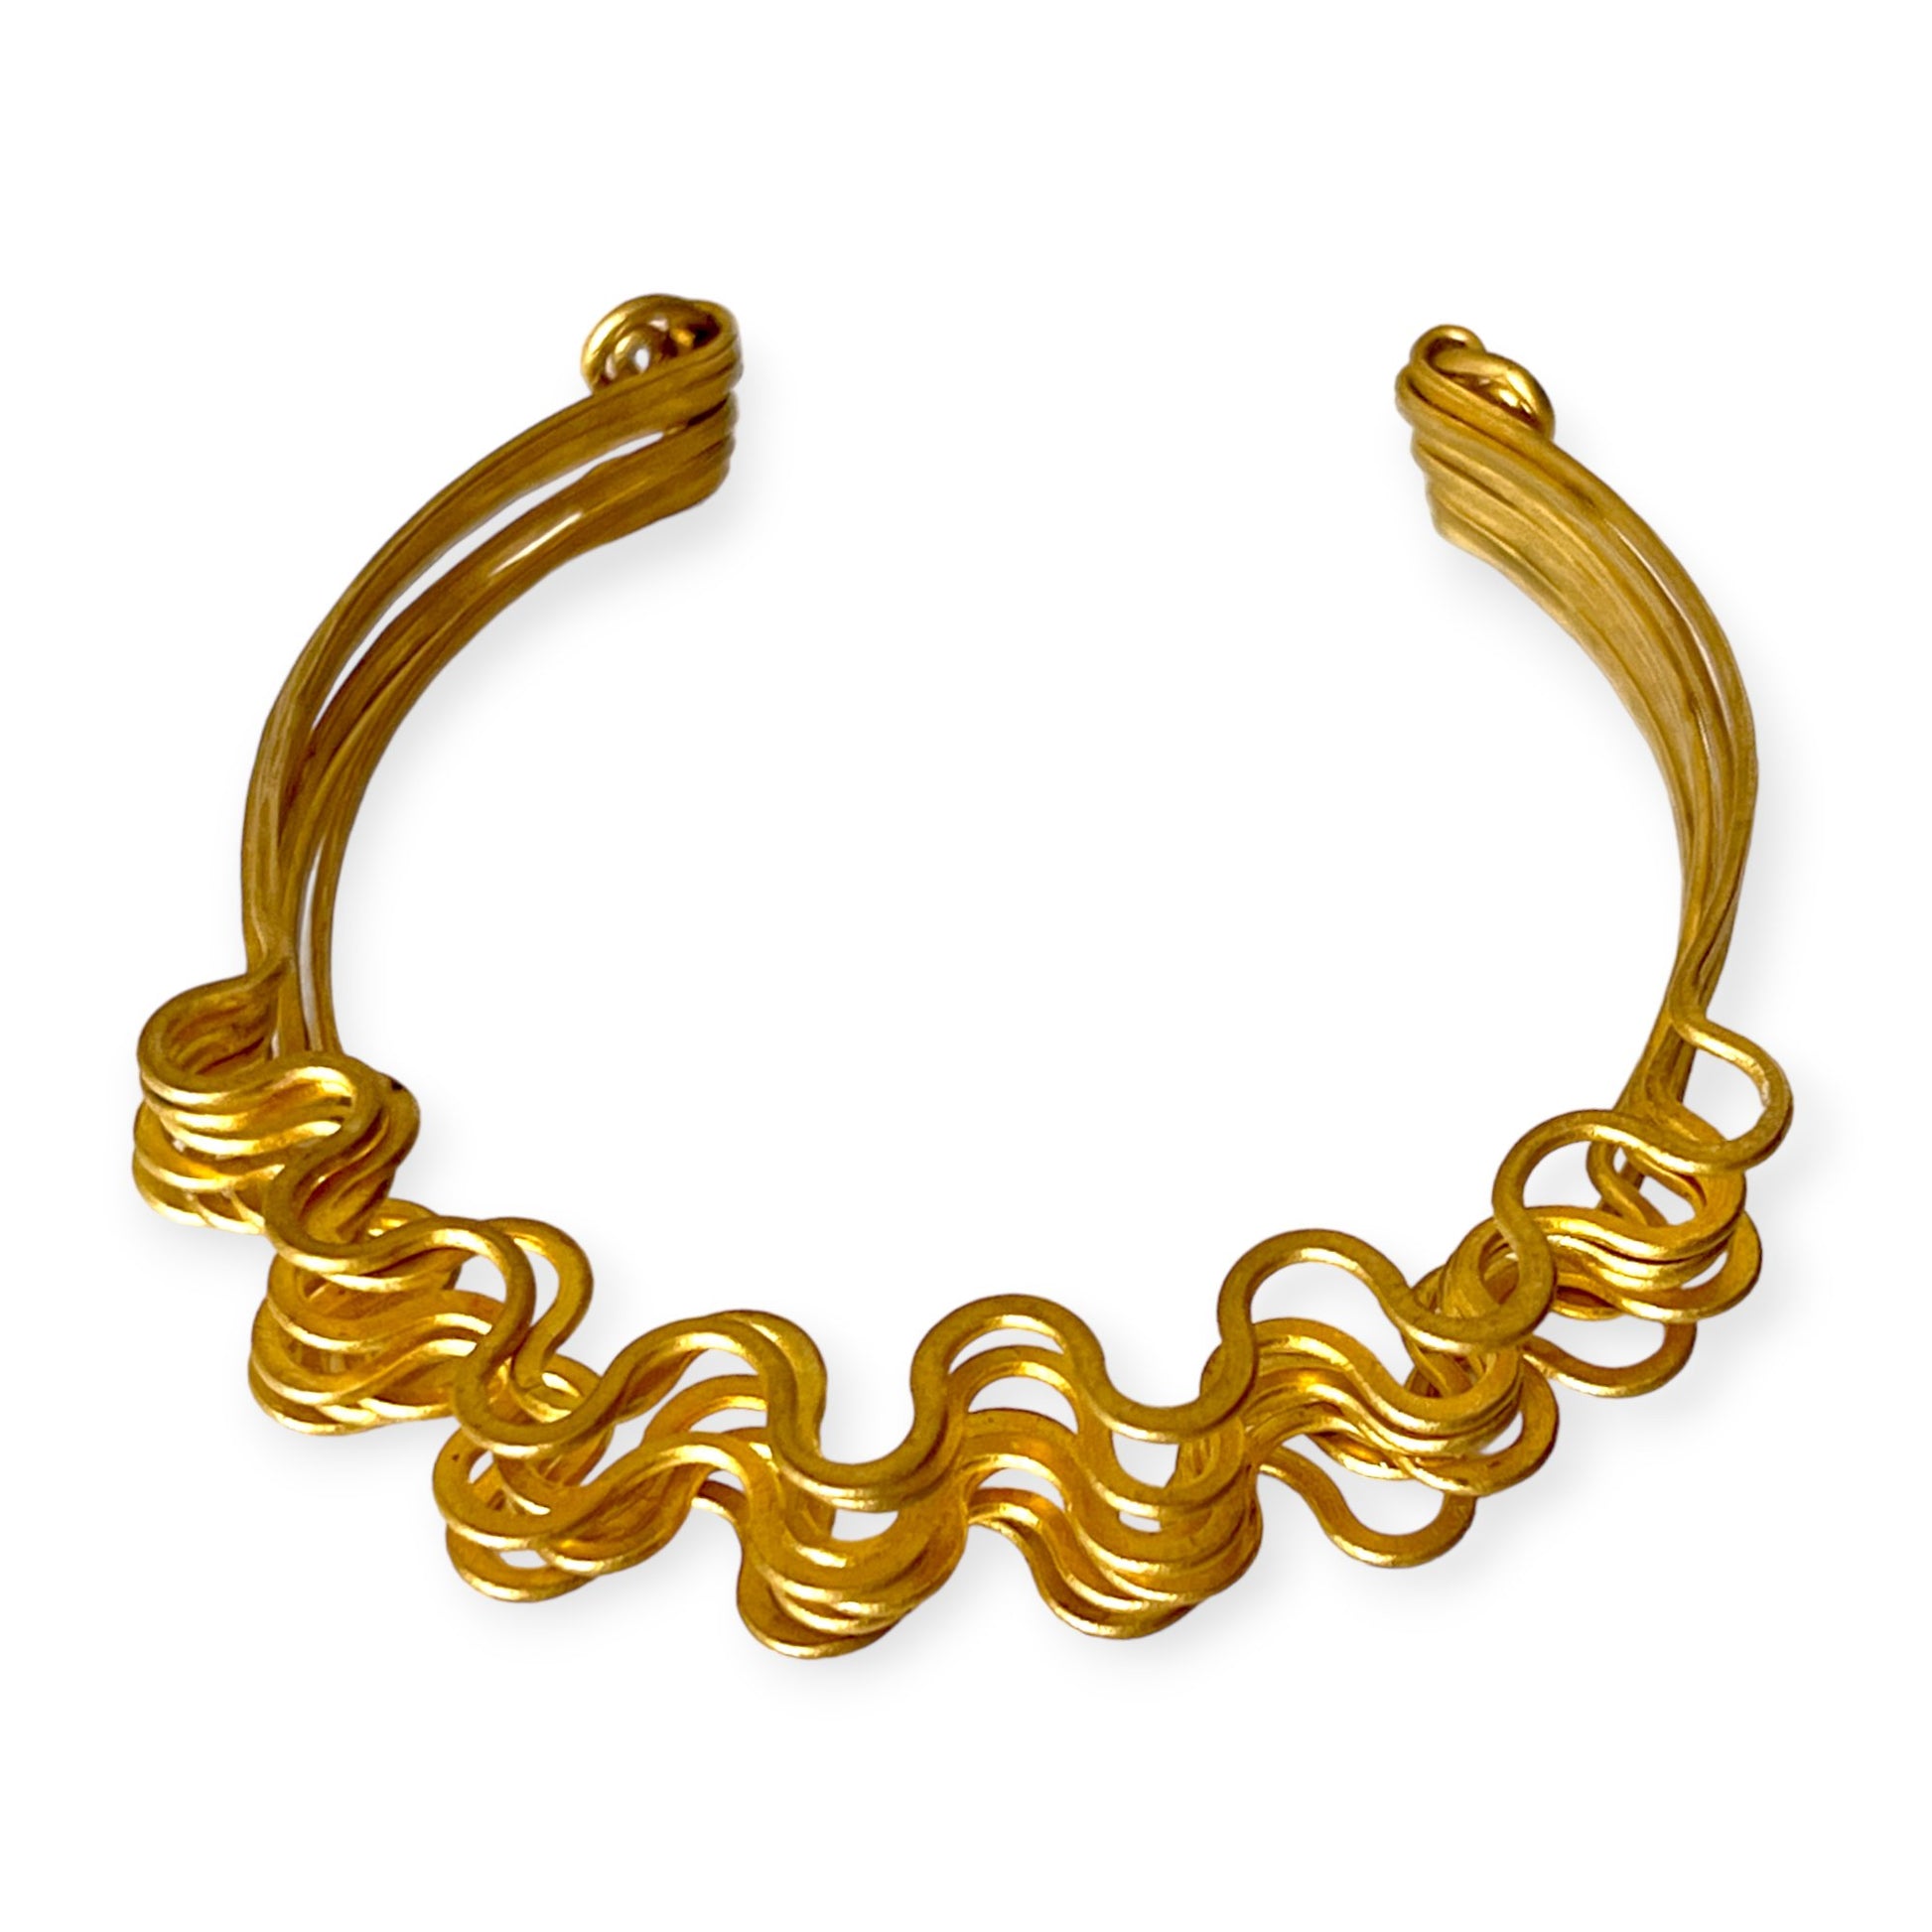 Squiggly brass metal cuff bracelet - Sundara Joon